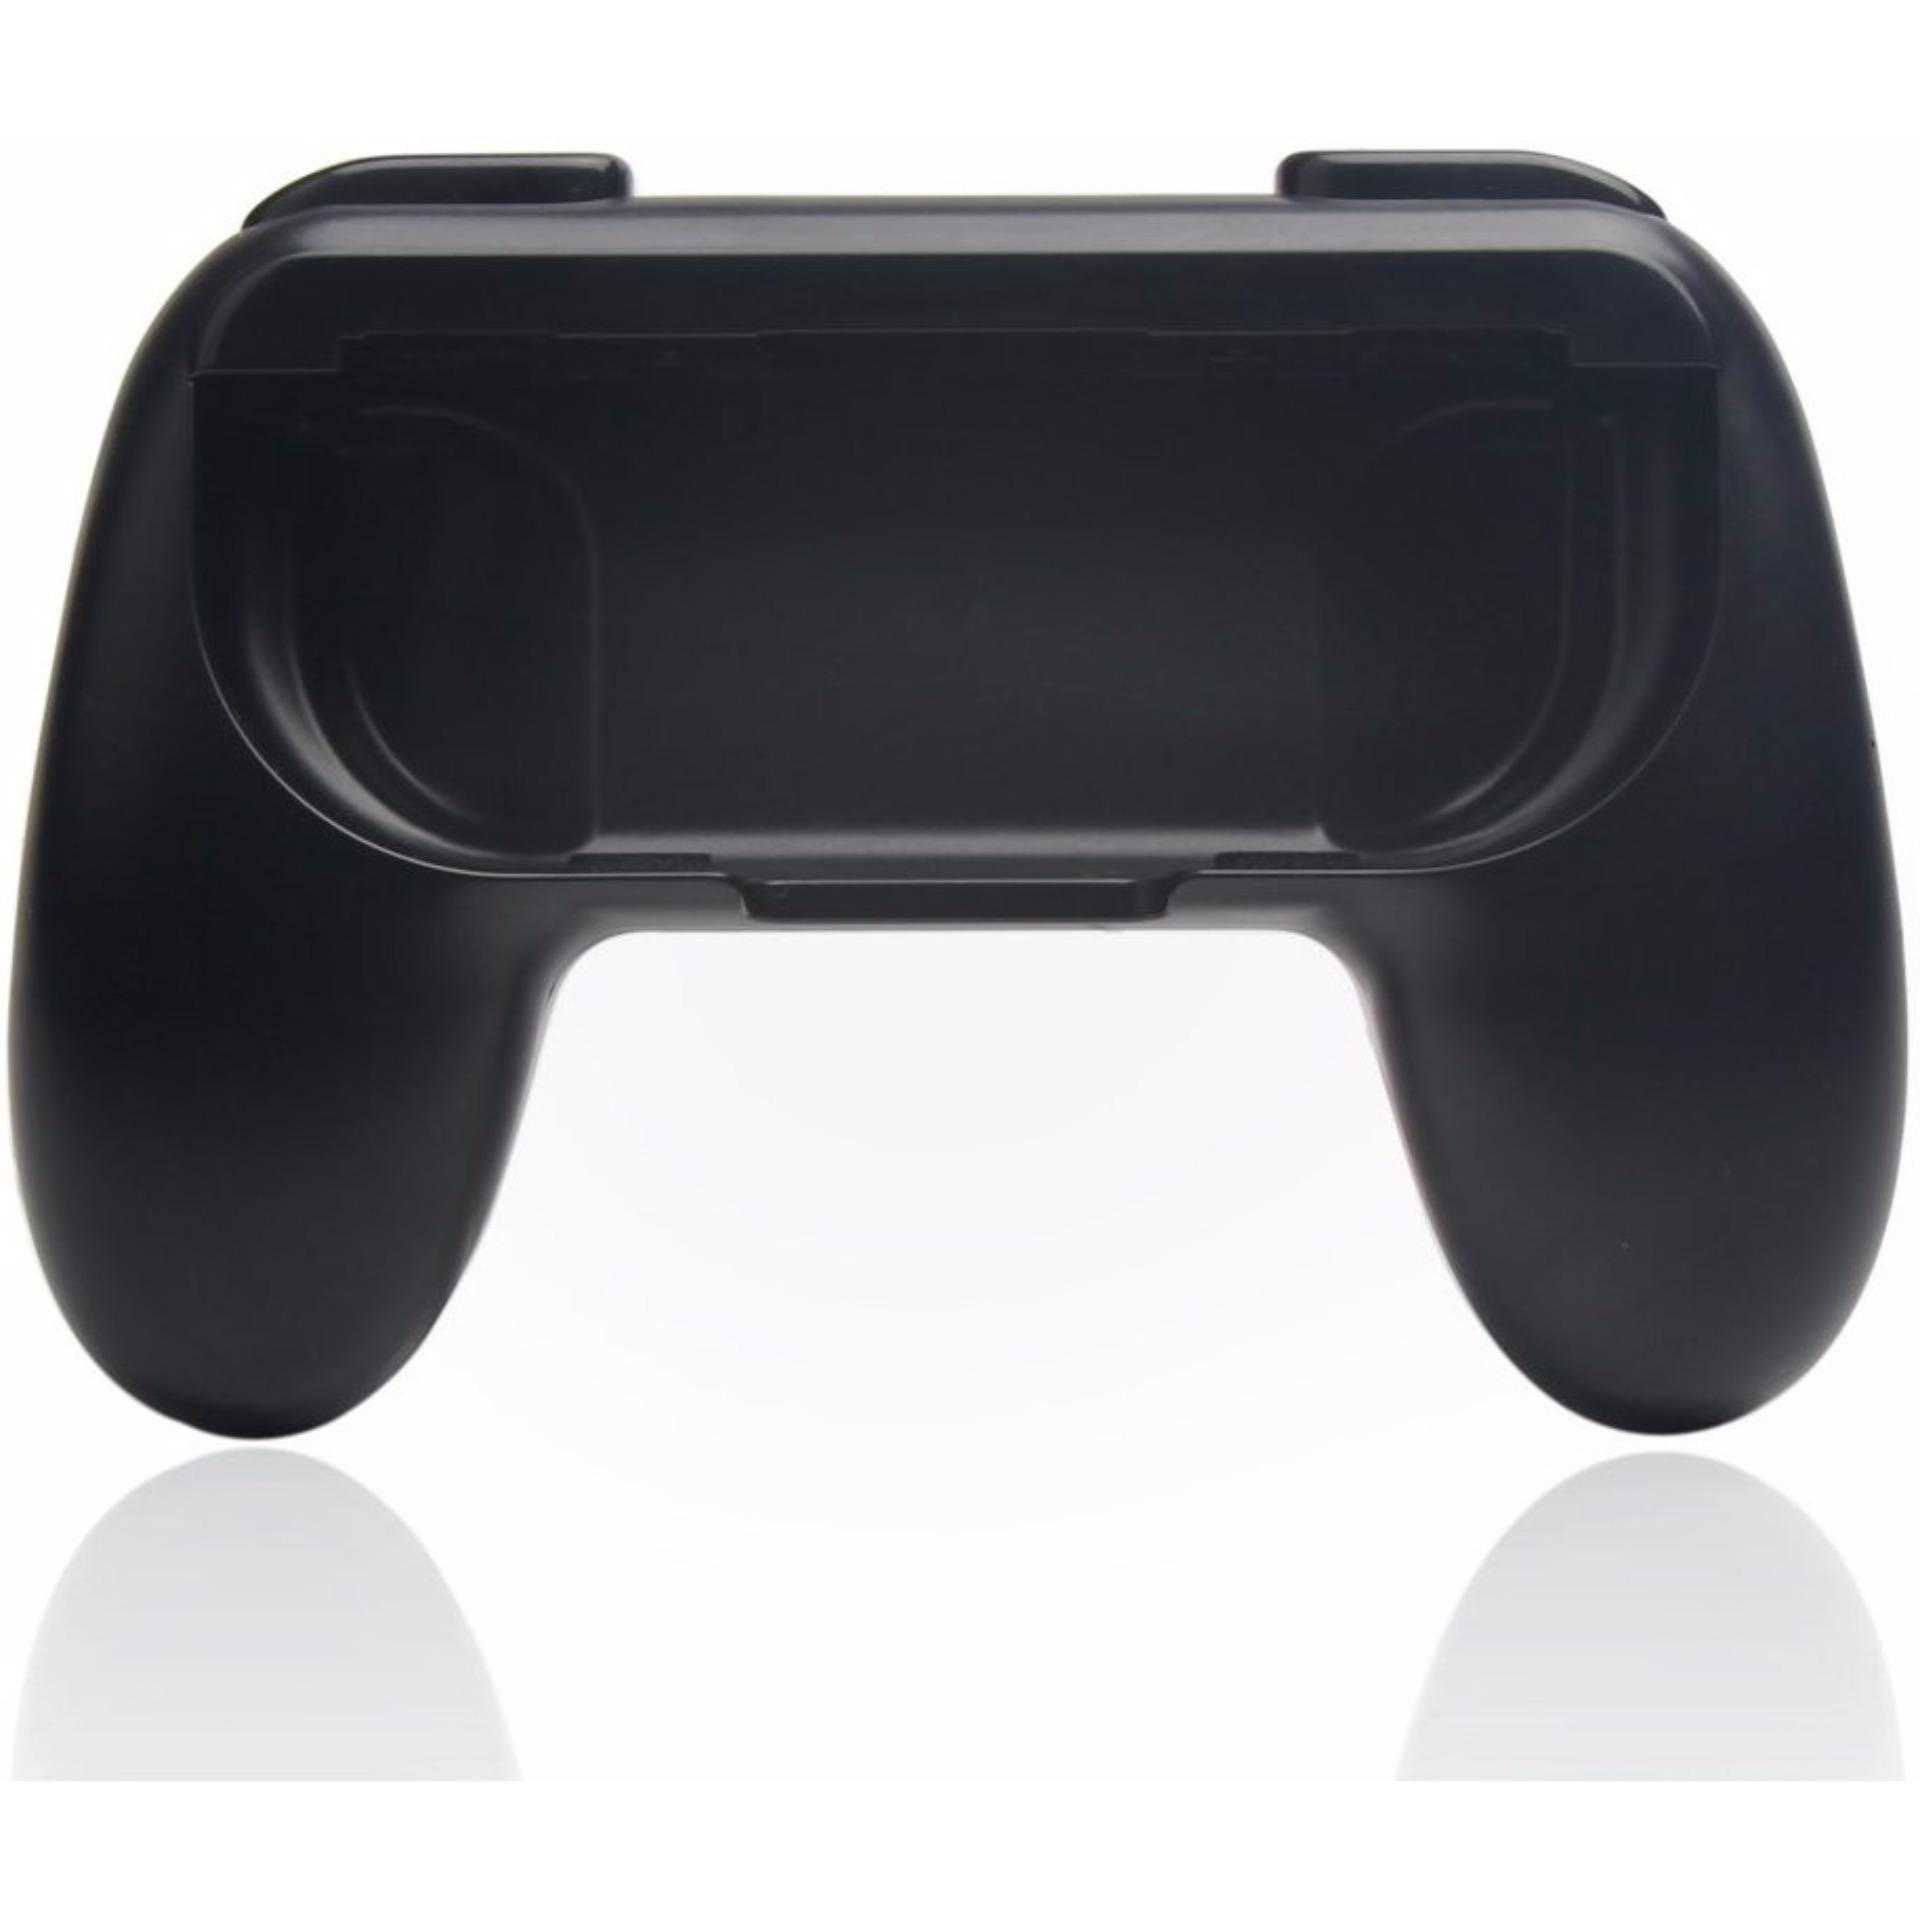 (2-PACK) DOBE Joy-Con Grip Kit for Nintendo Switch , High Quality Wear-resistant Joy con Handle Holder for Nintendo Switch (Black+Black)